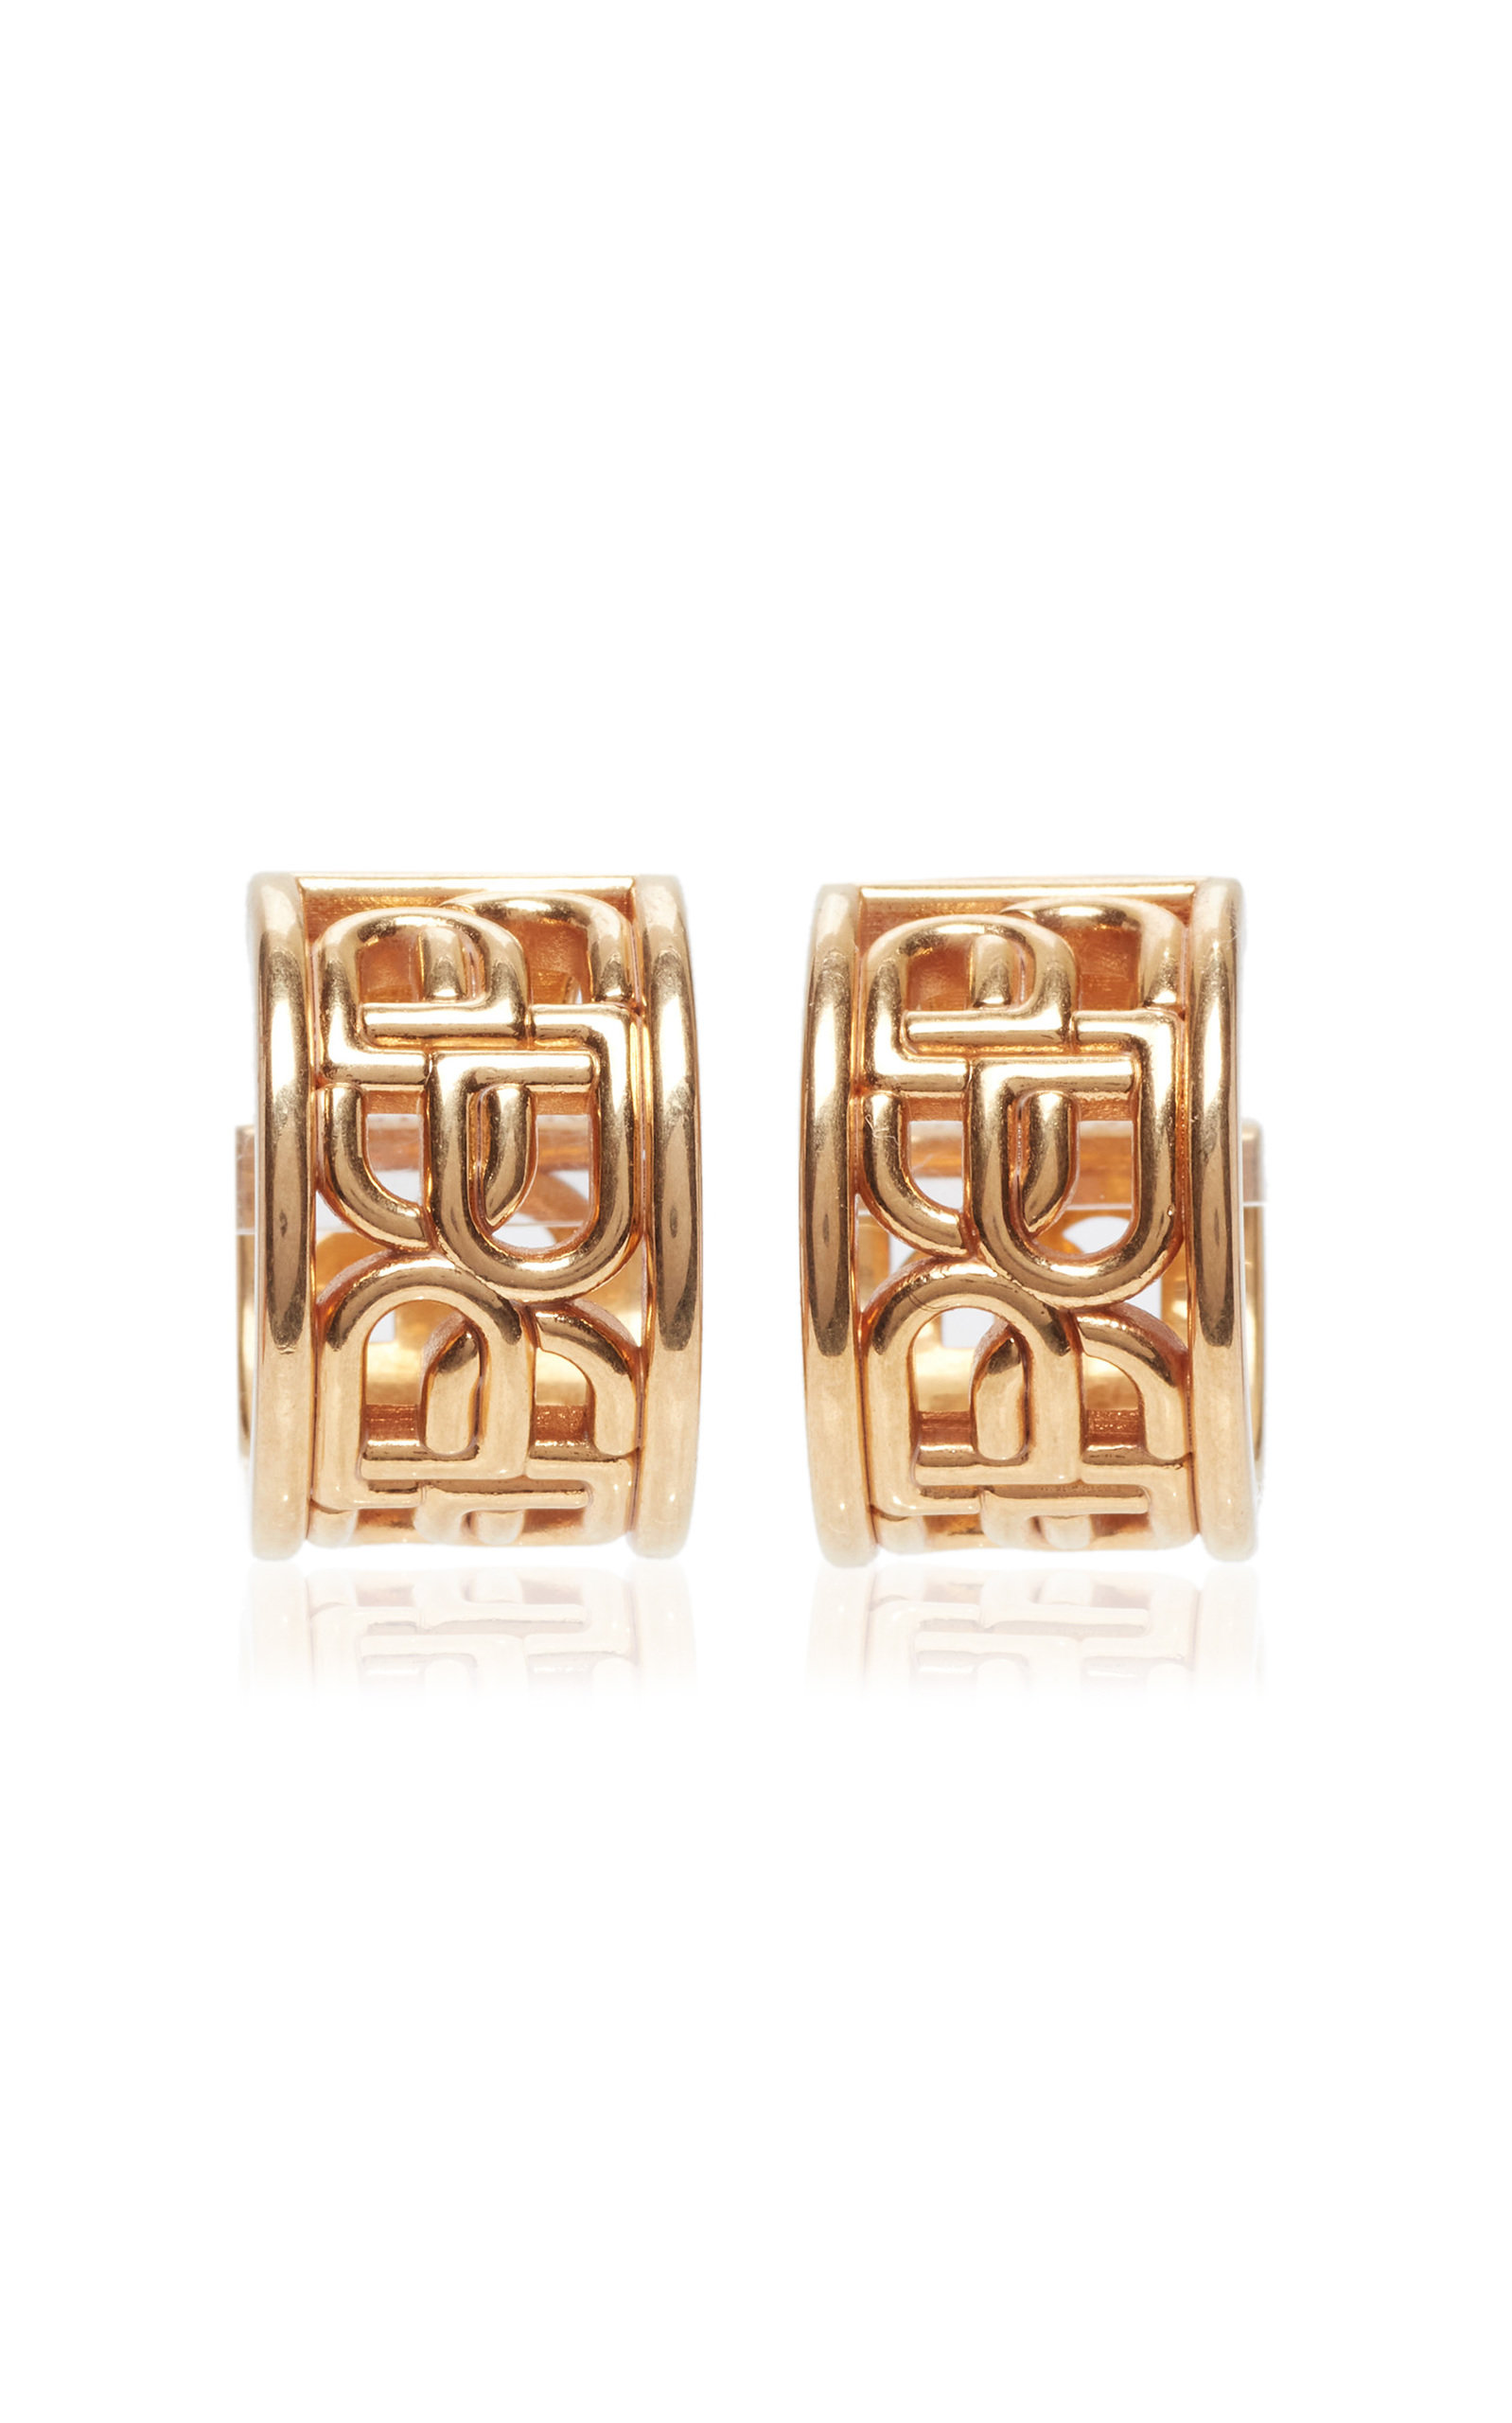 Balenciaga - Women's BB Gold-Plated Hoop Earrings - Gold - Moda Operandi - Gifts For Her